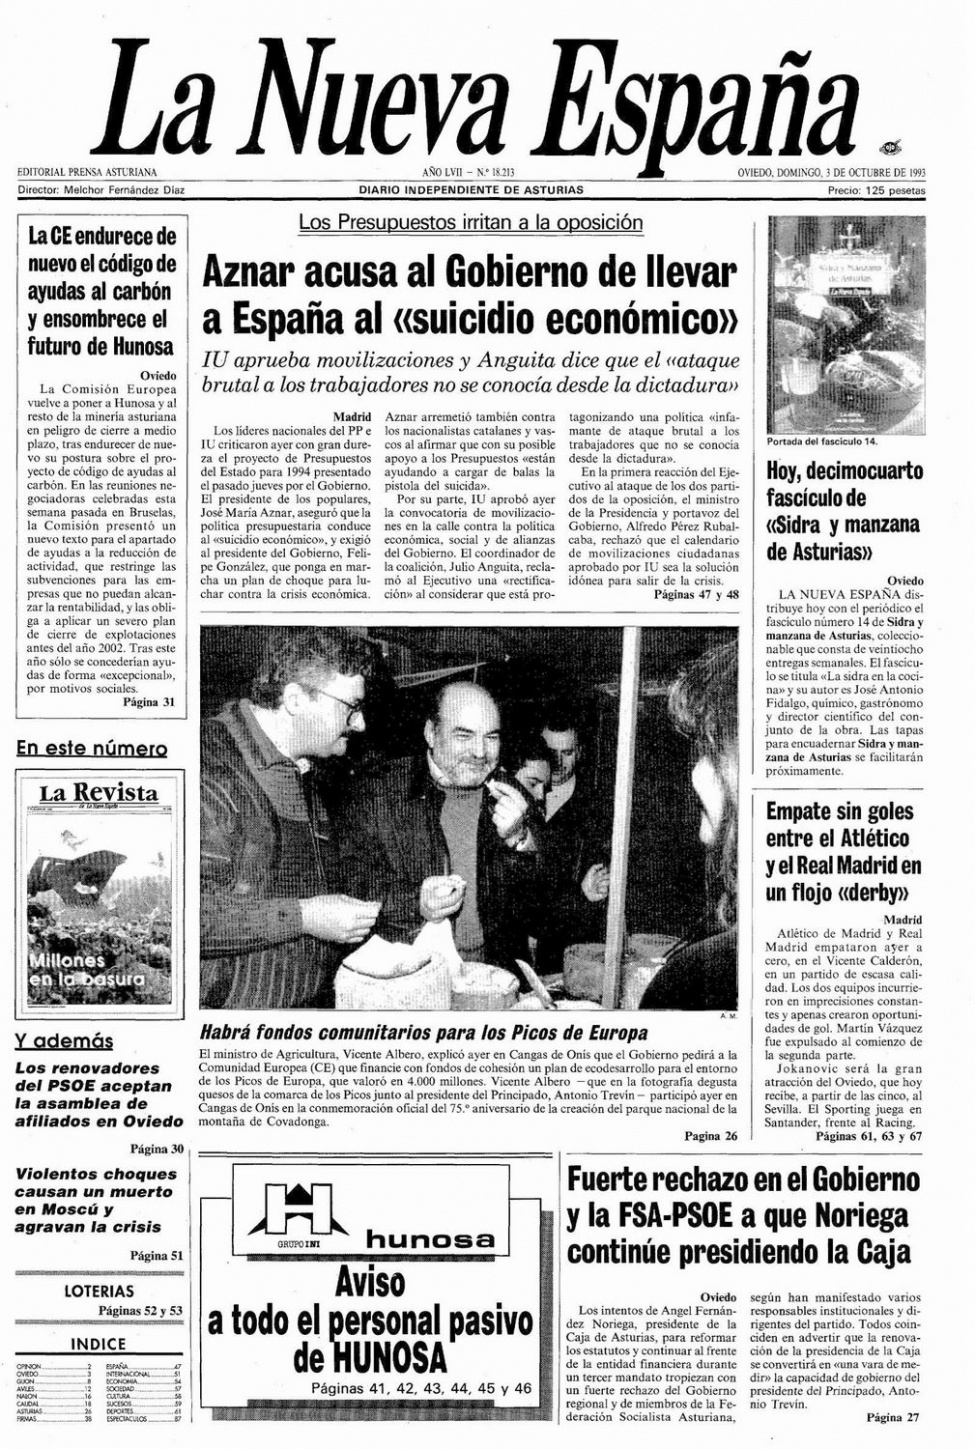 Portada del Domingo, 3 de Octubre de 1993